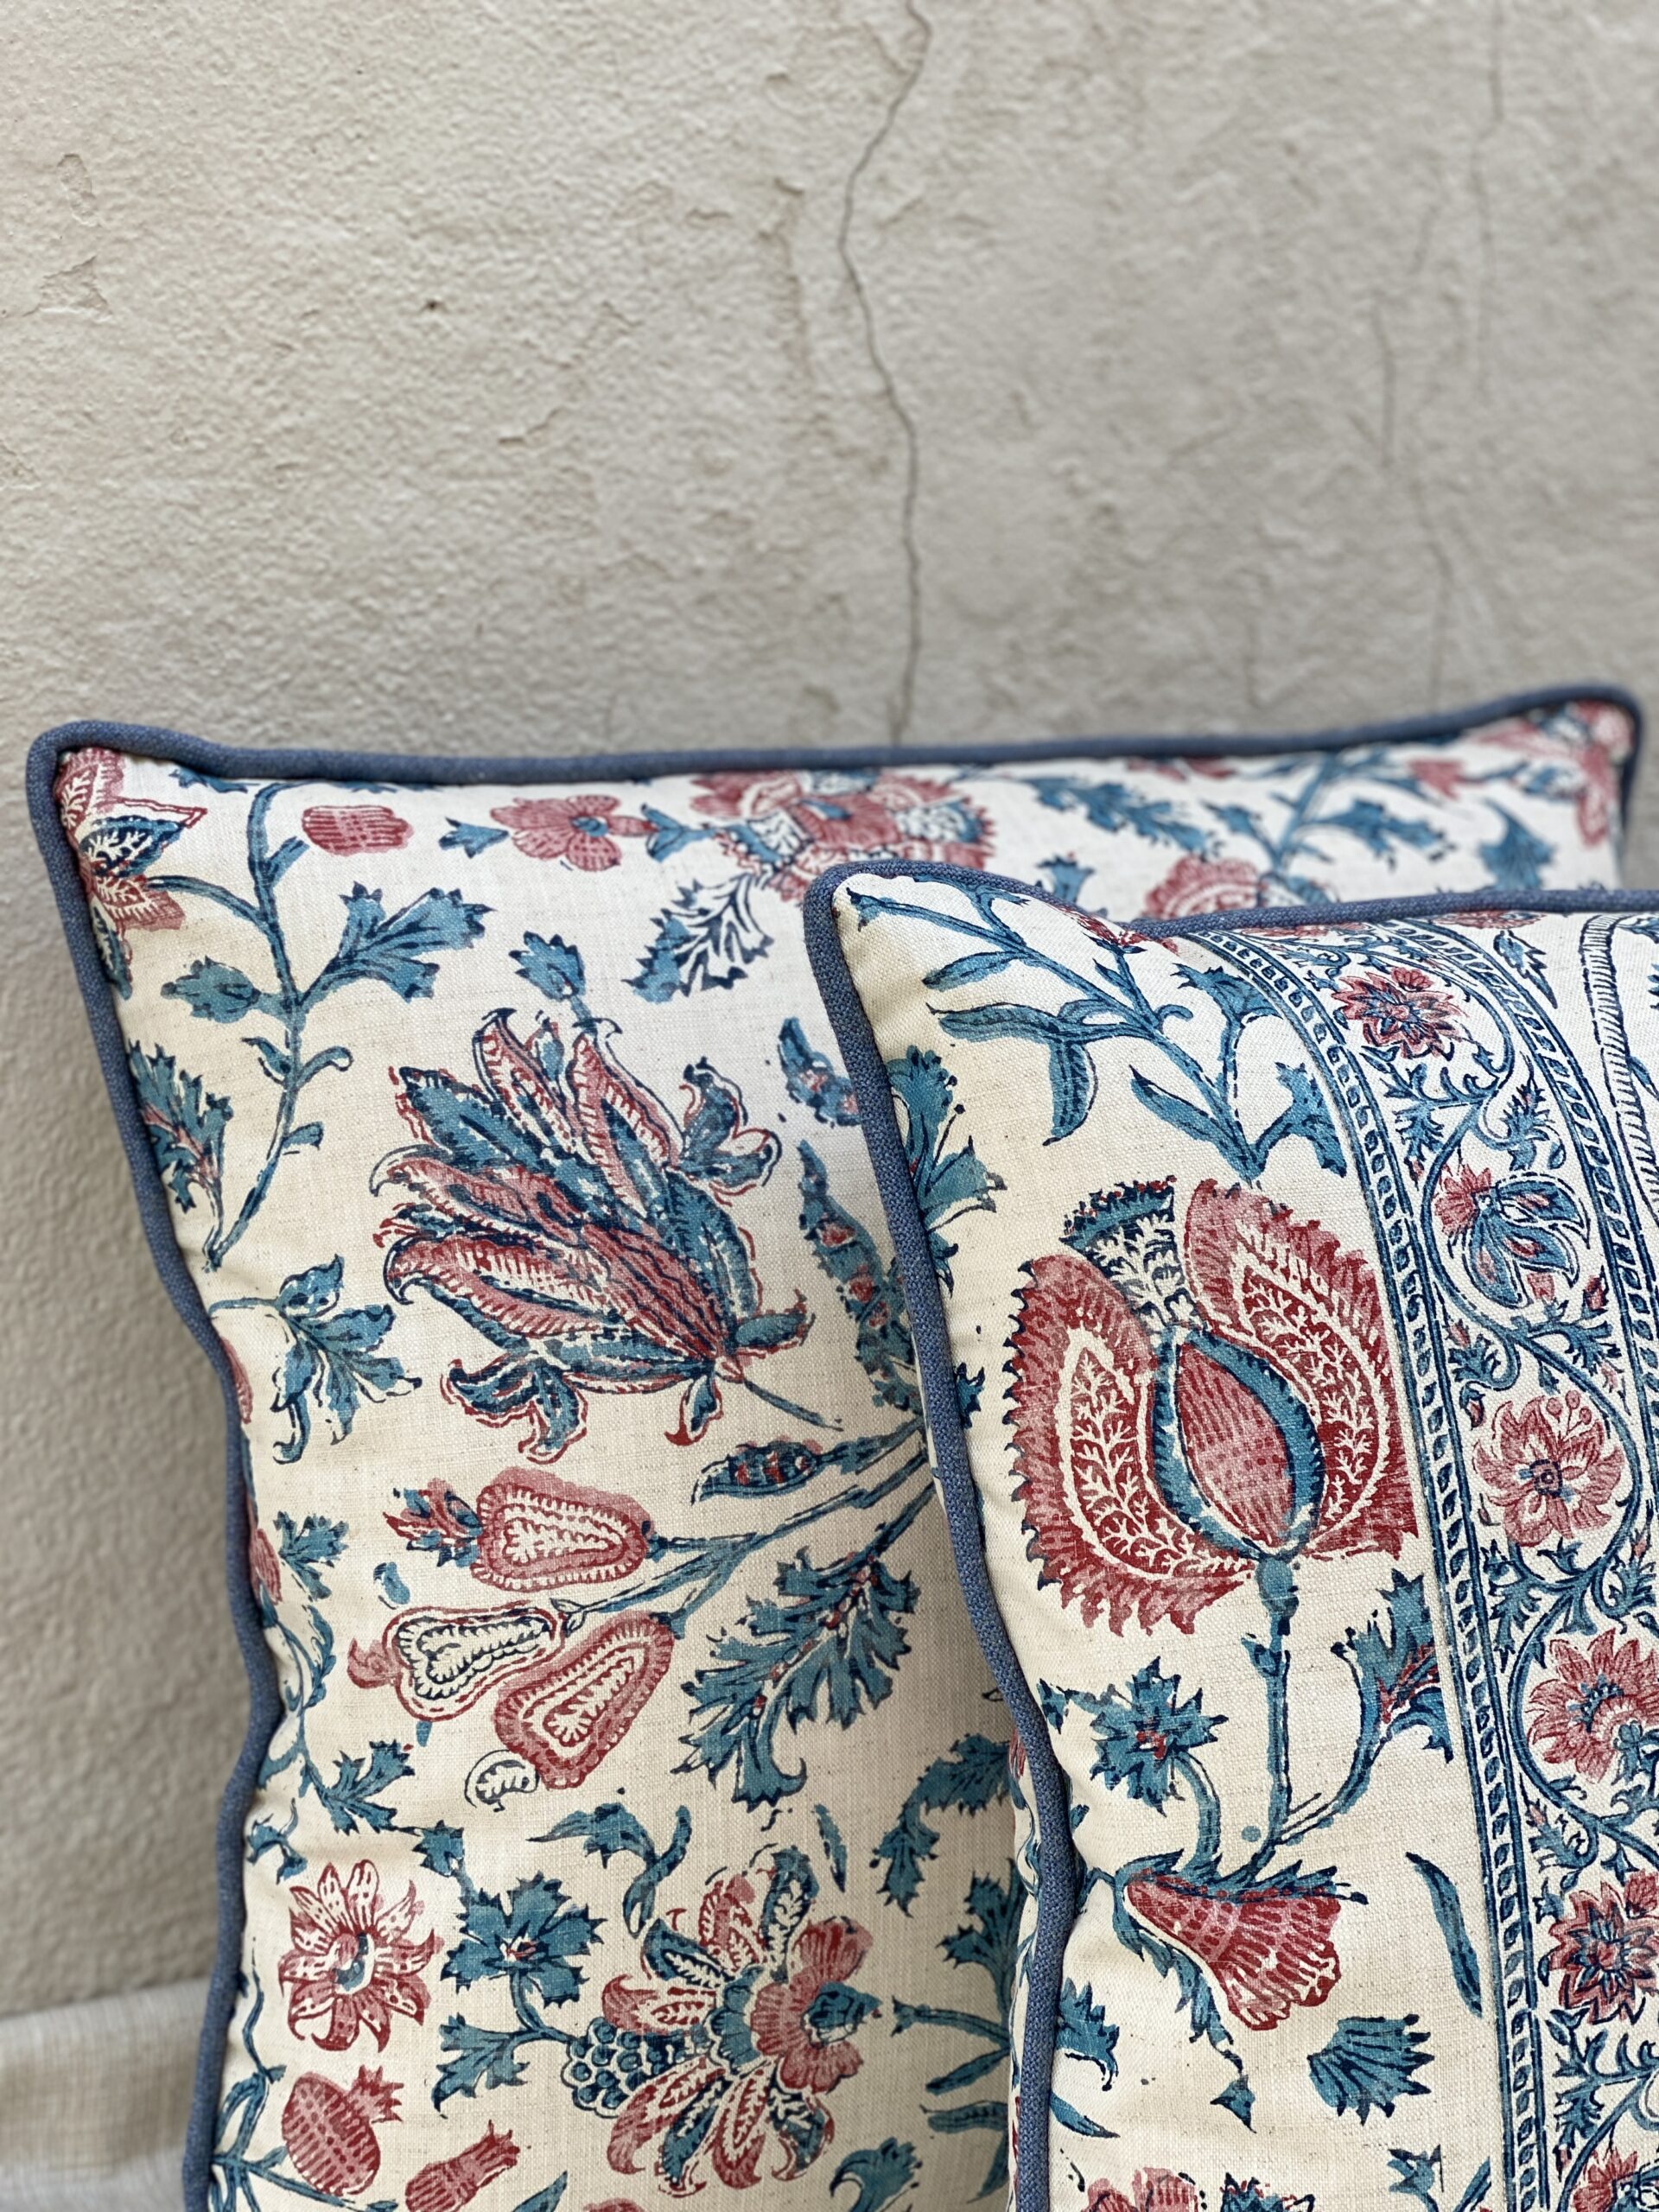 Lisa Fine Textiles Pillows